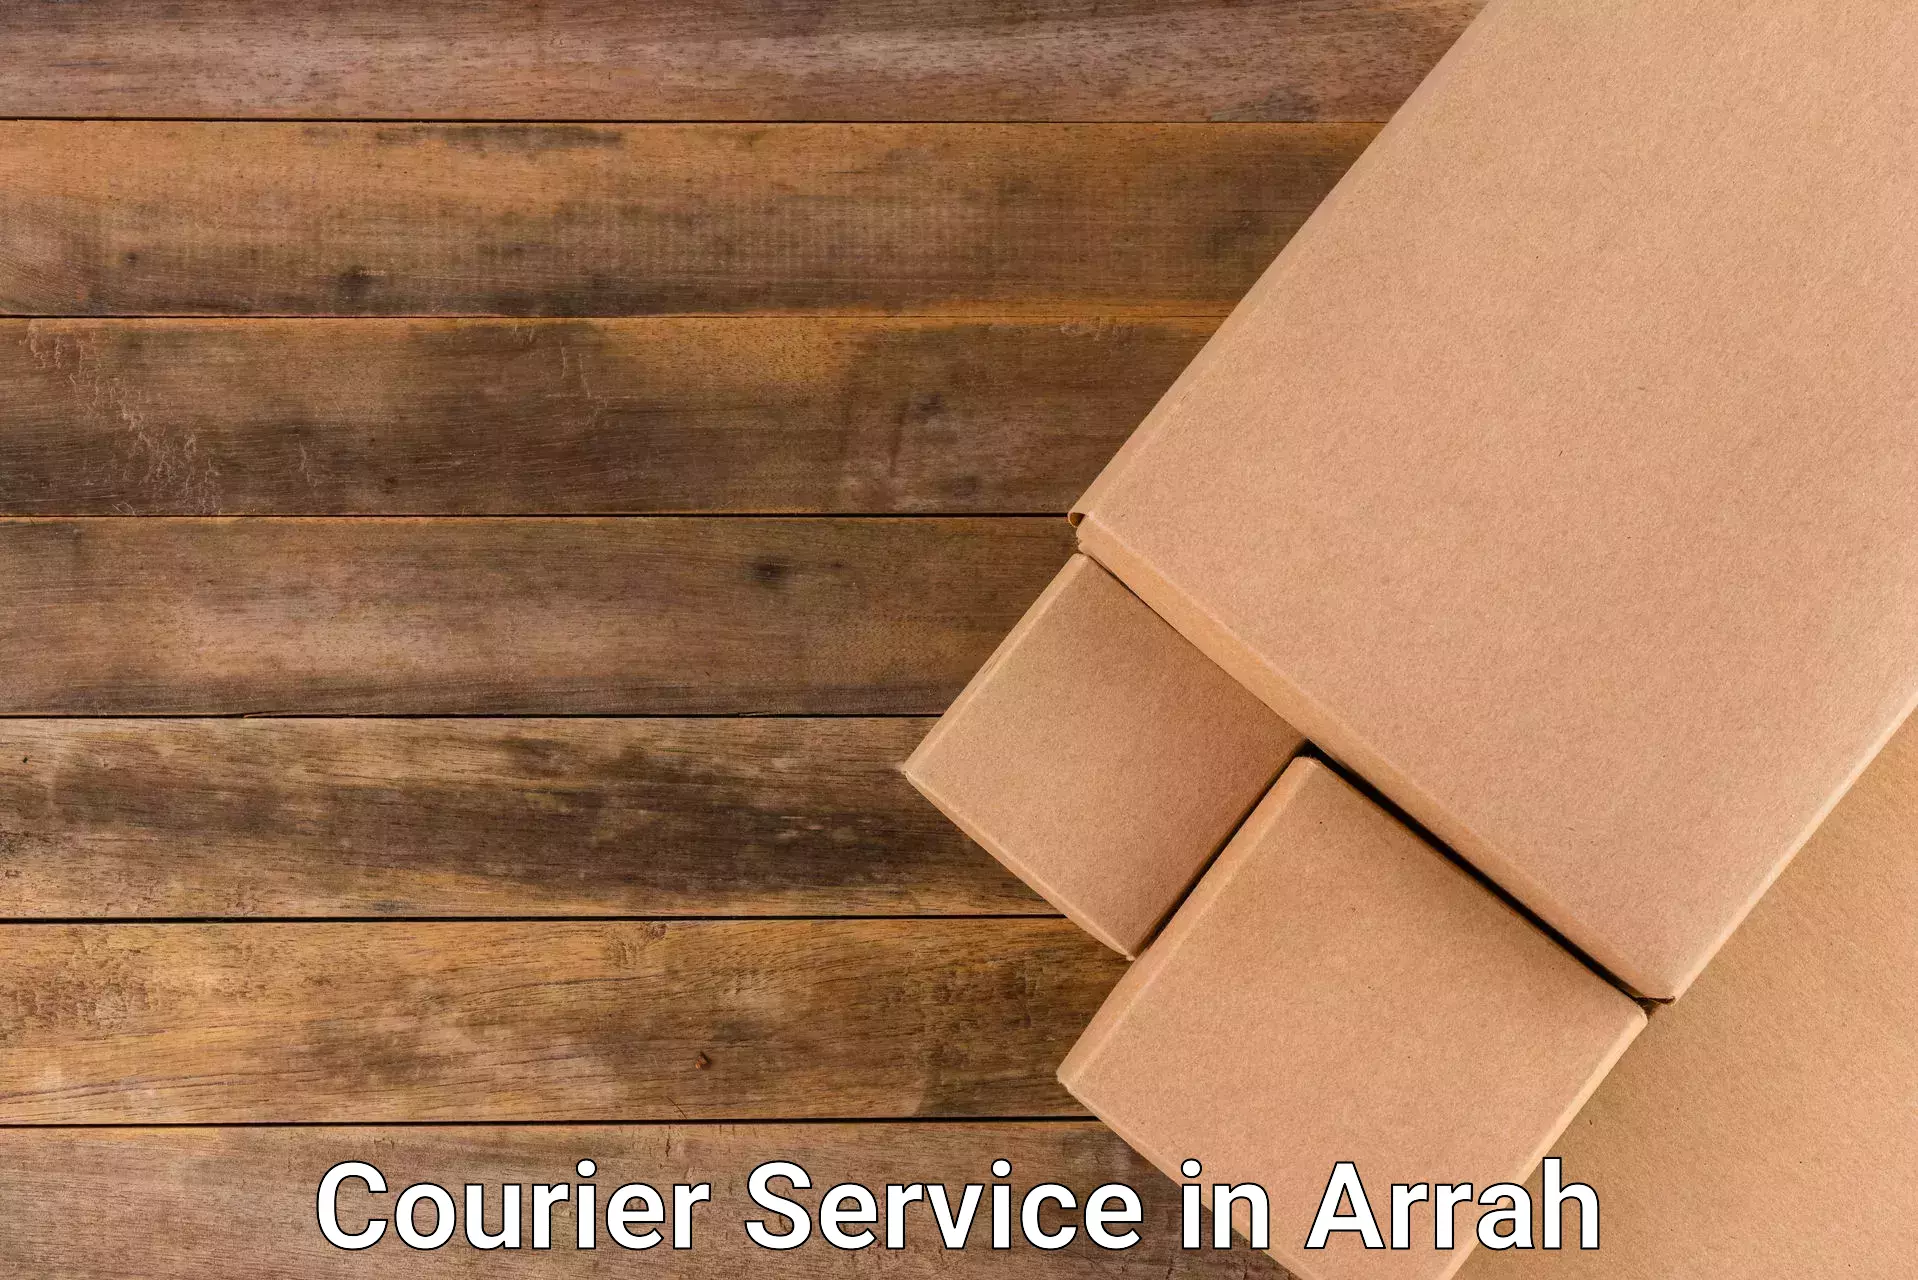 Remote area delivery in Arrah